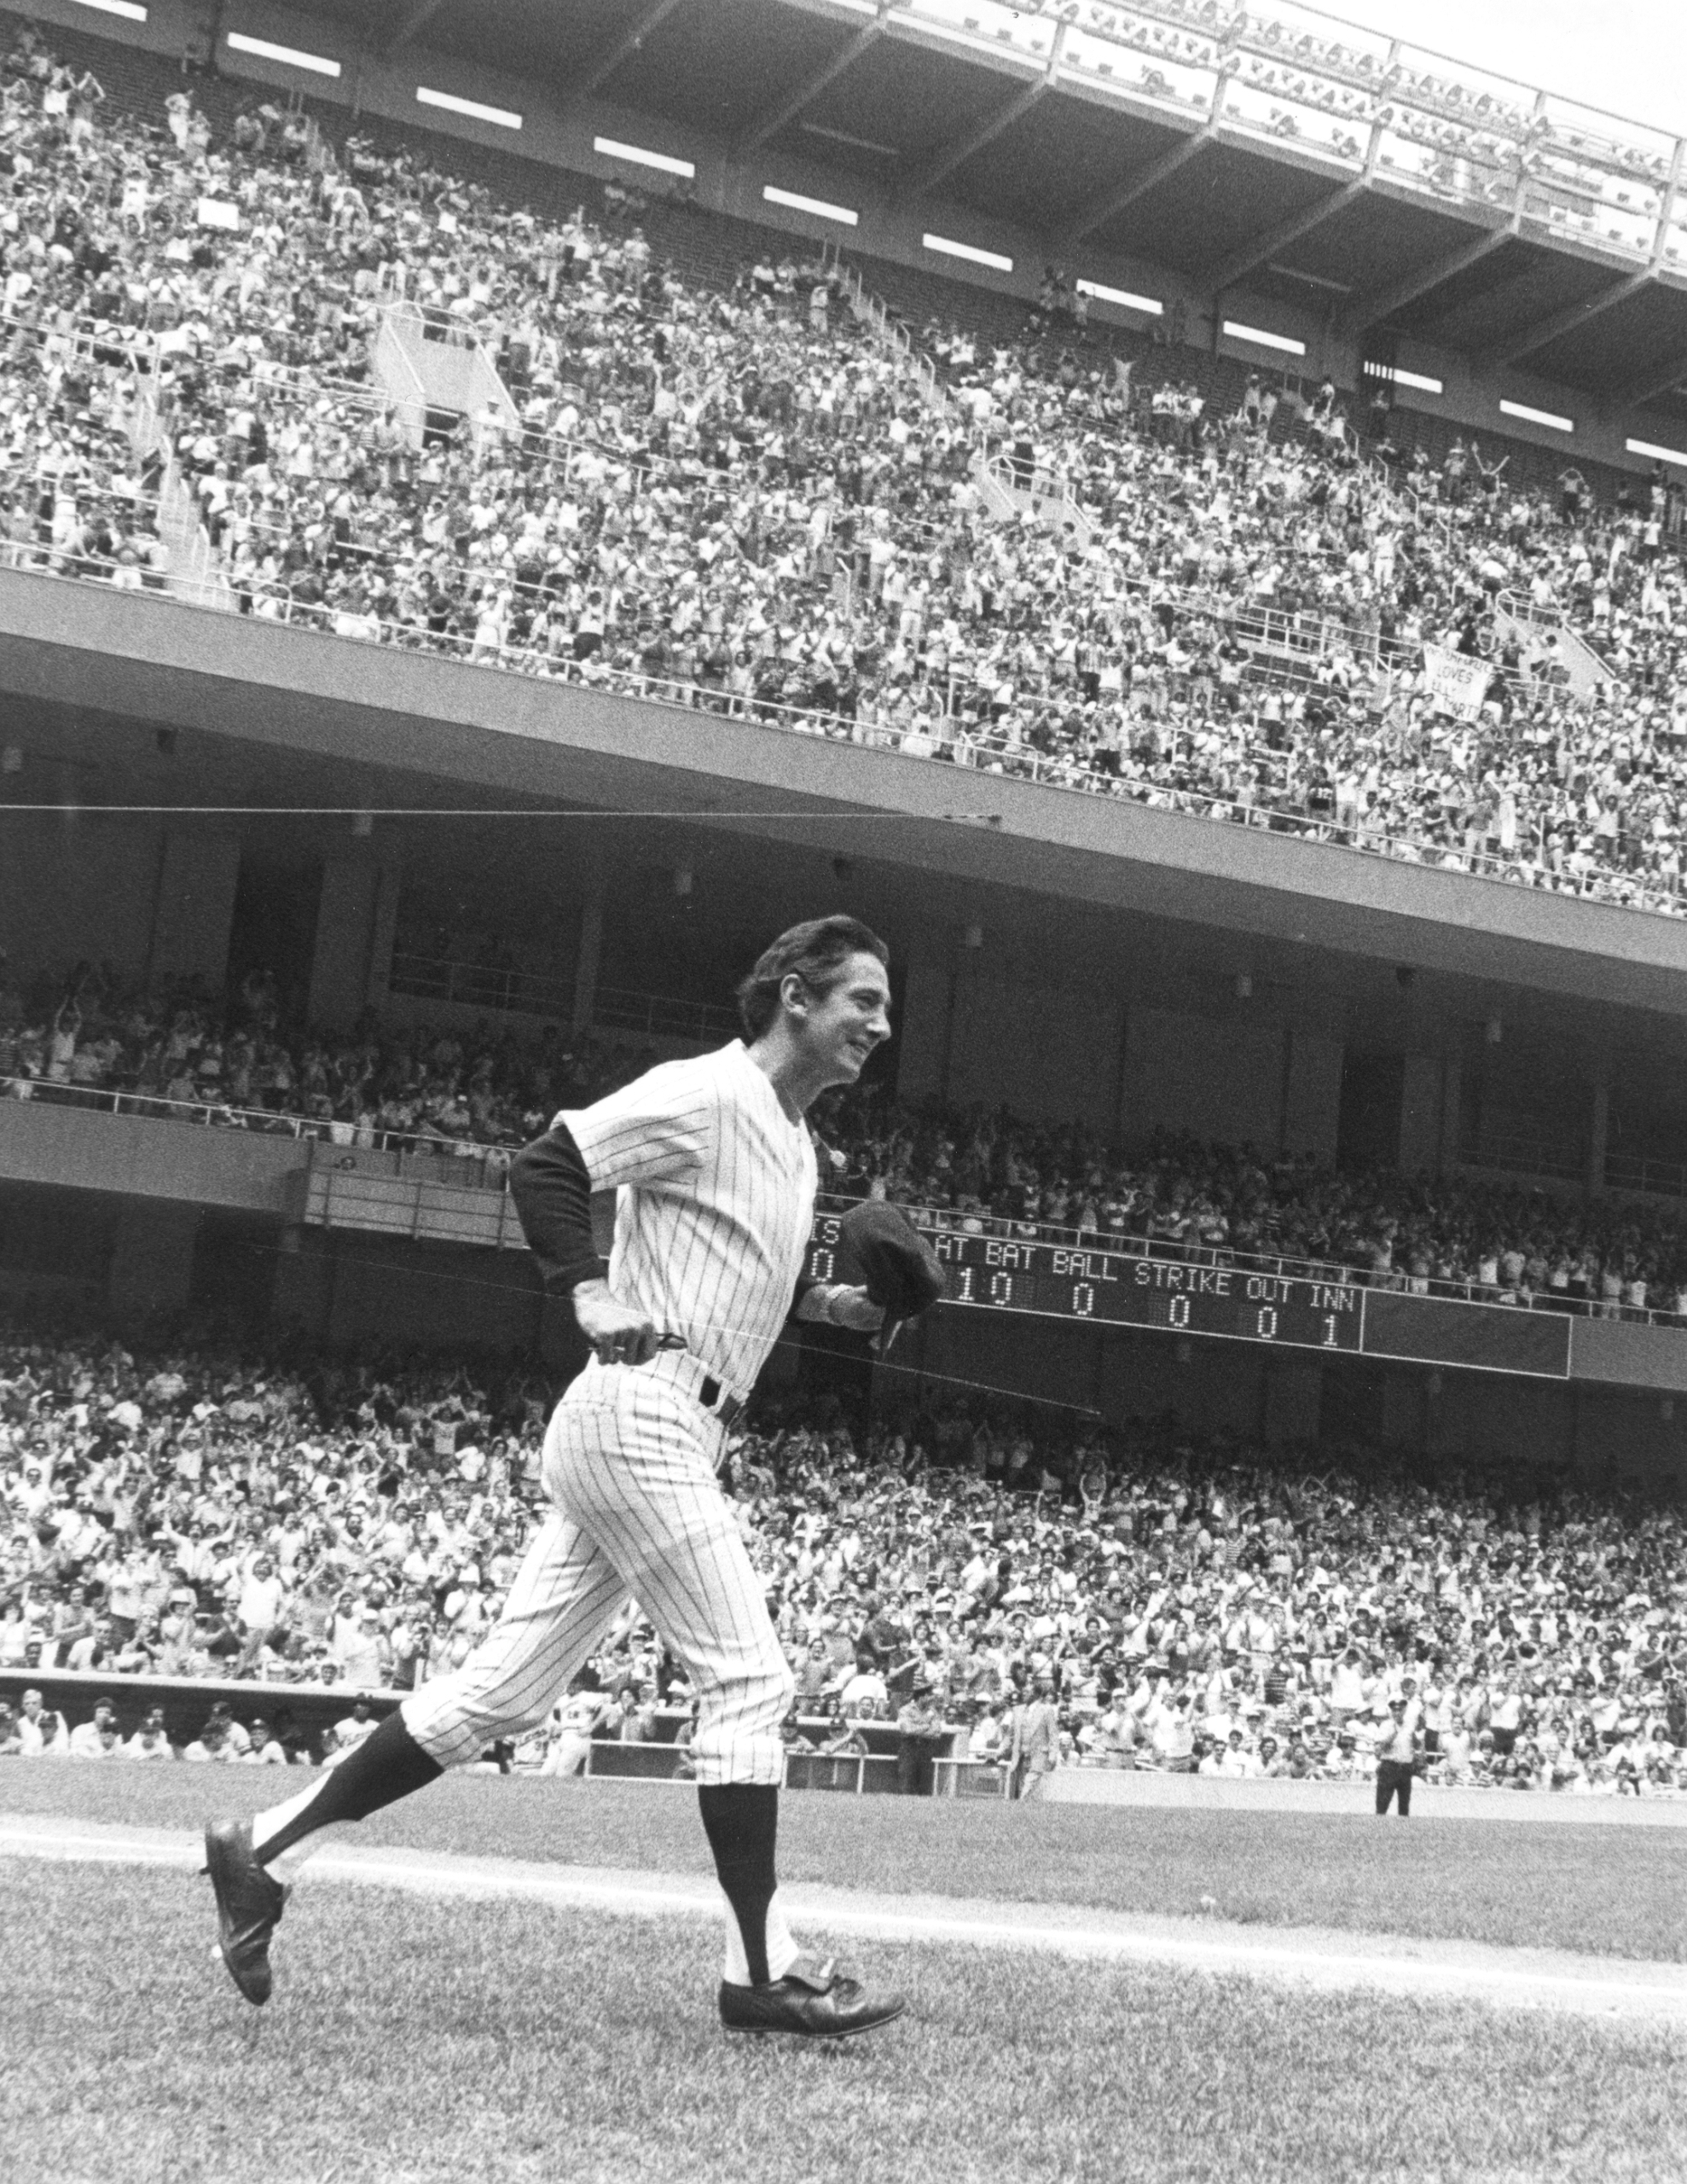 Billy Martin: Baseball's Flawed Genius by Bill Pennington